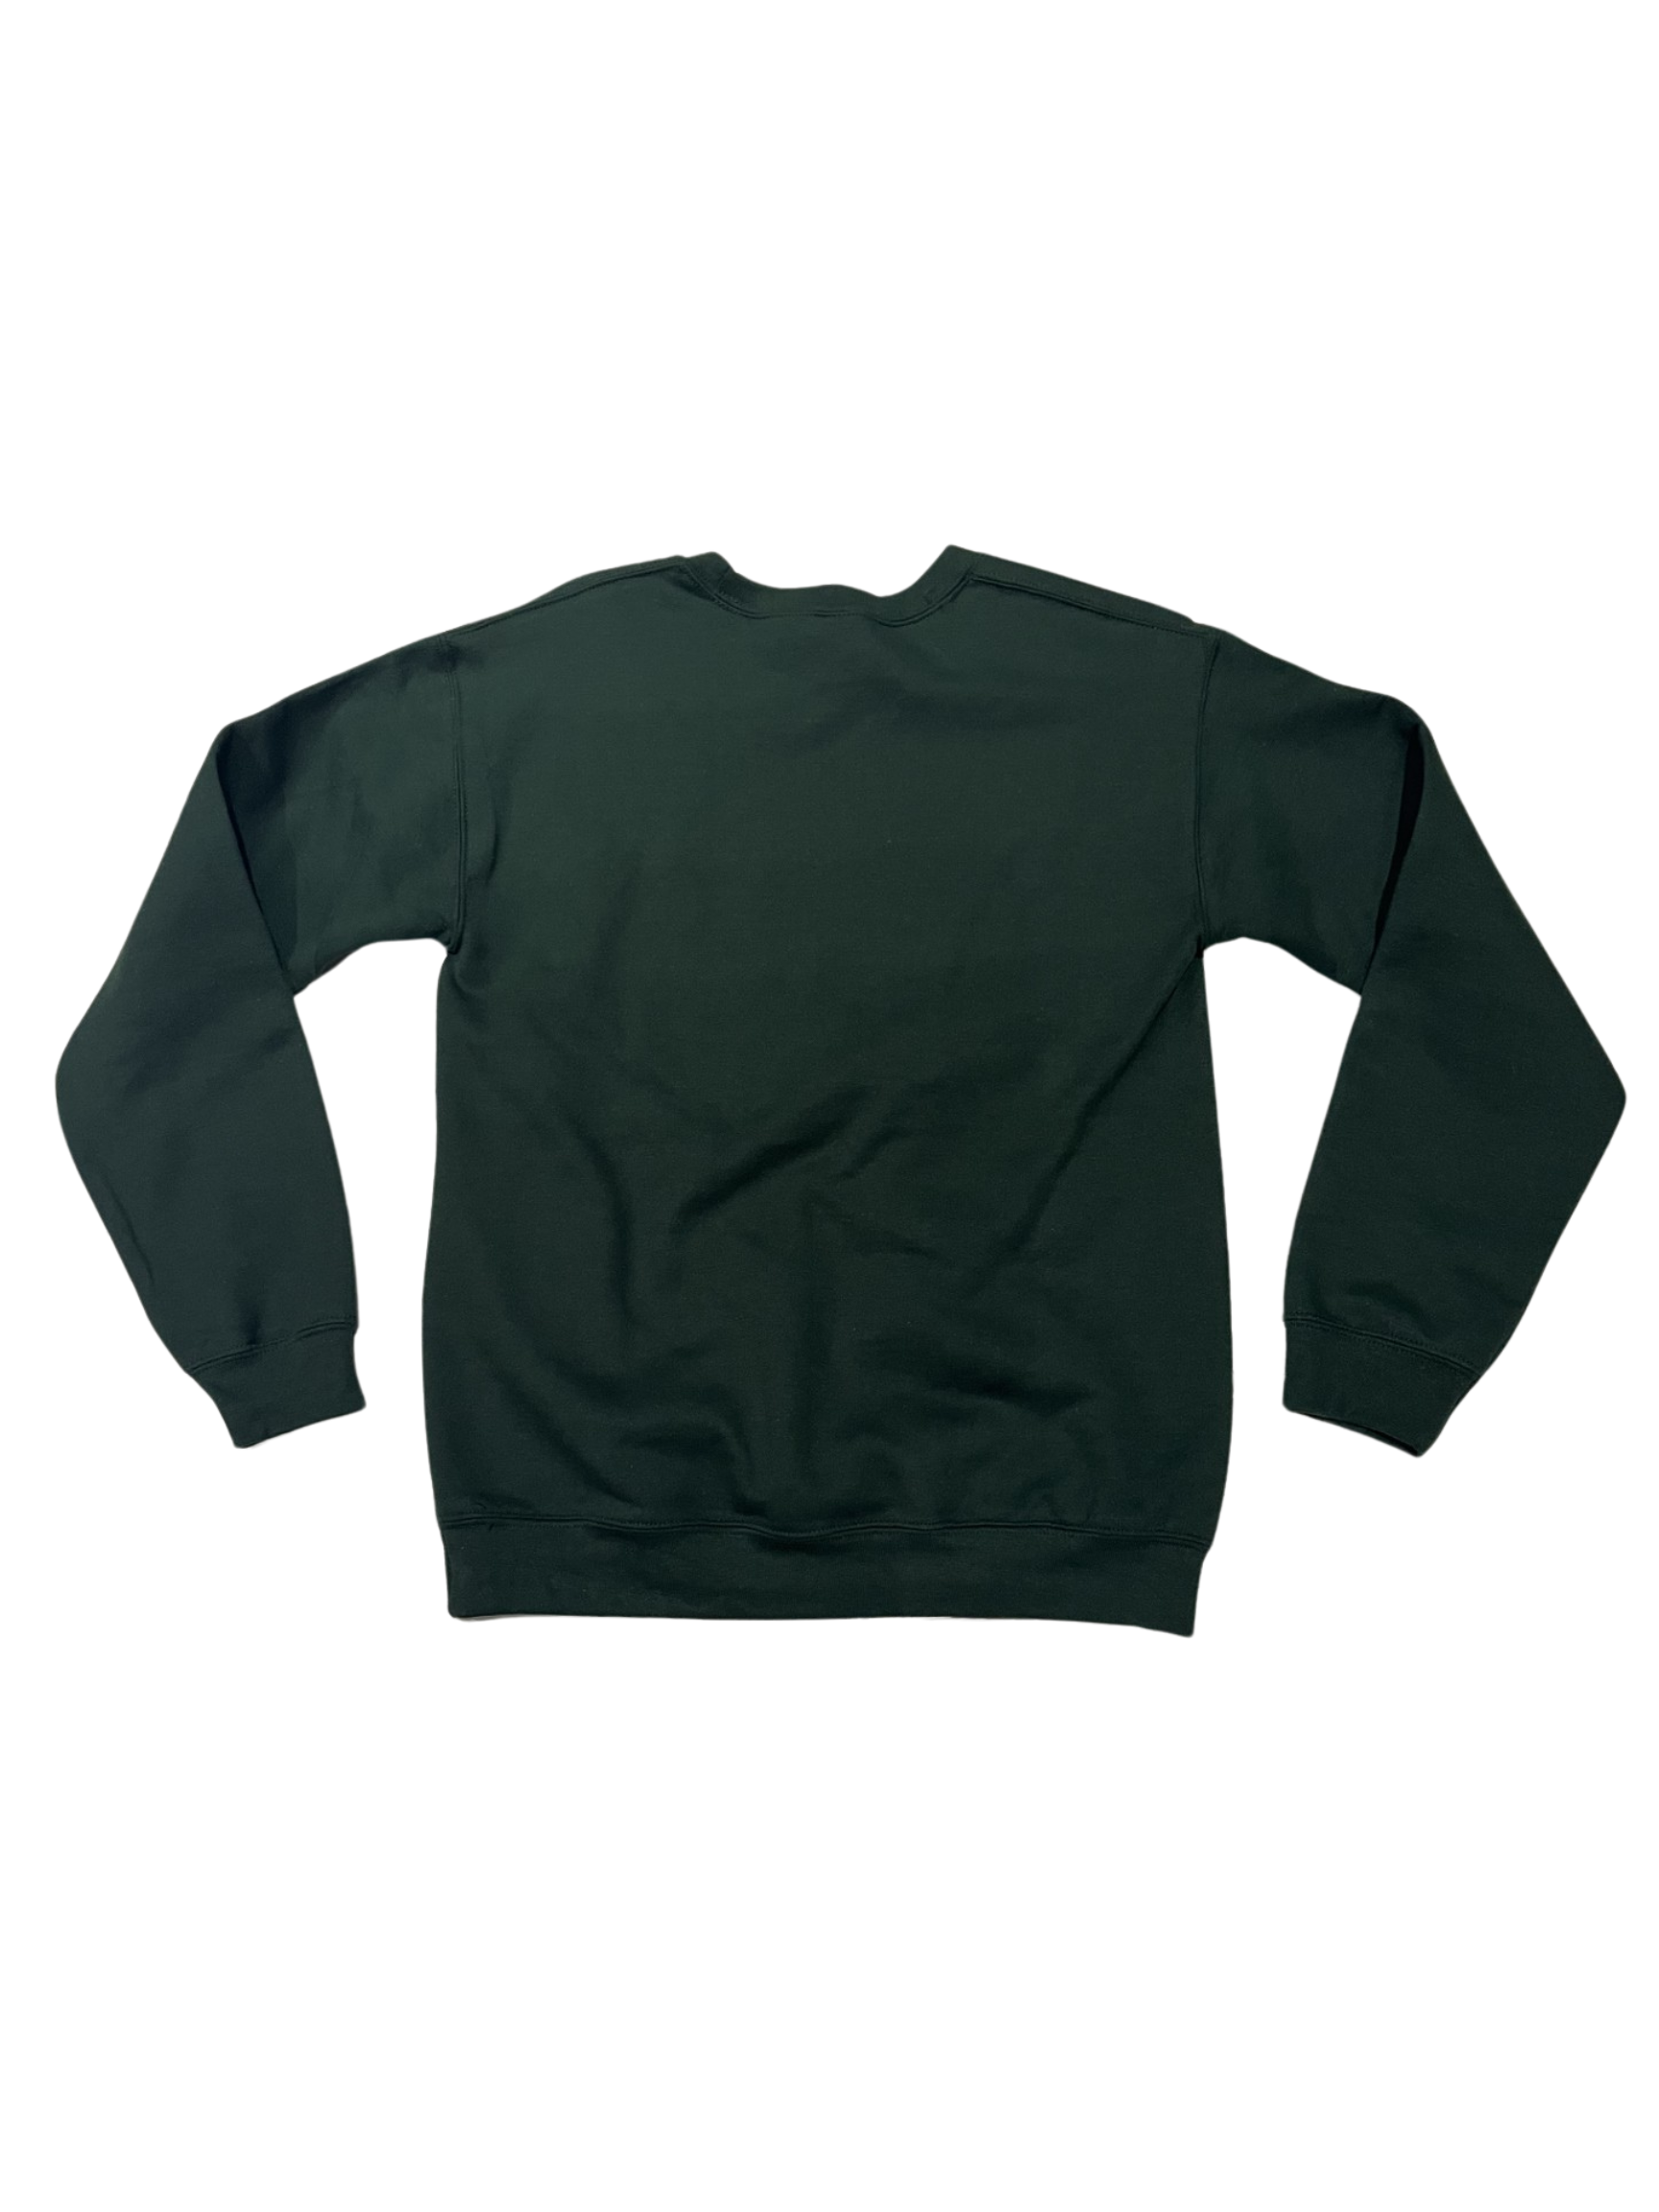 Forest Green Swirl Sweatshirt